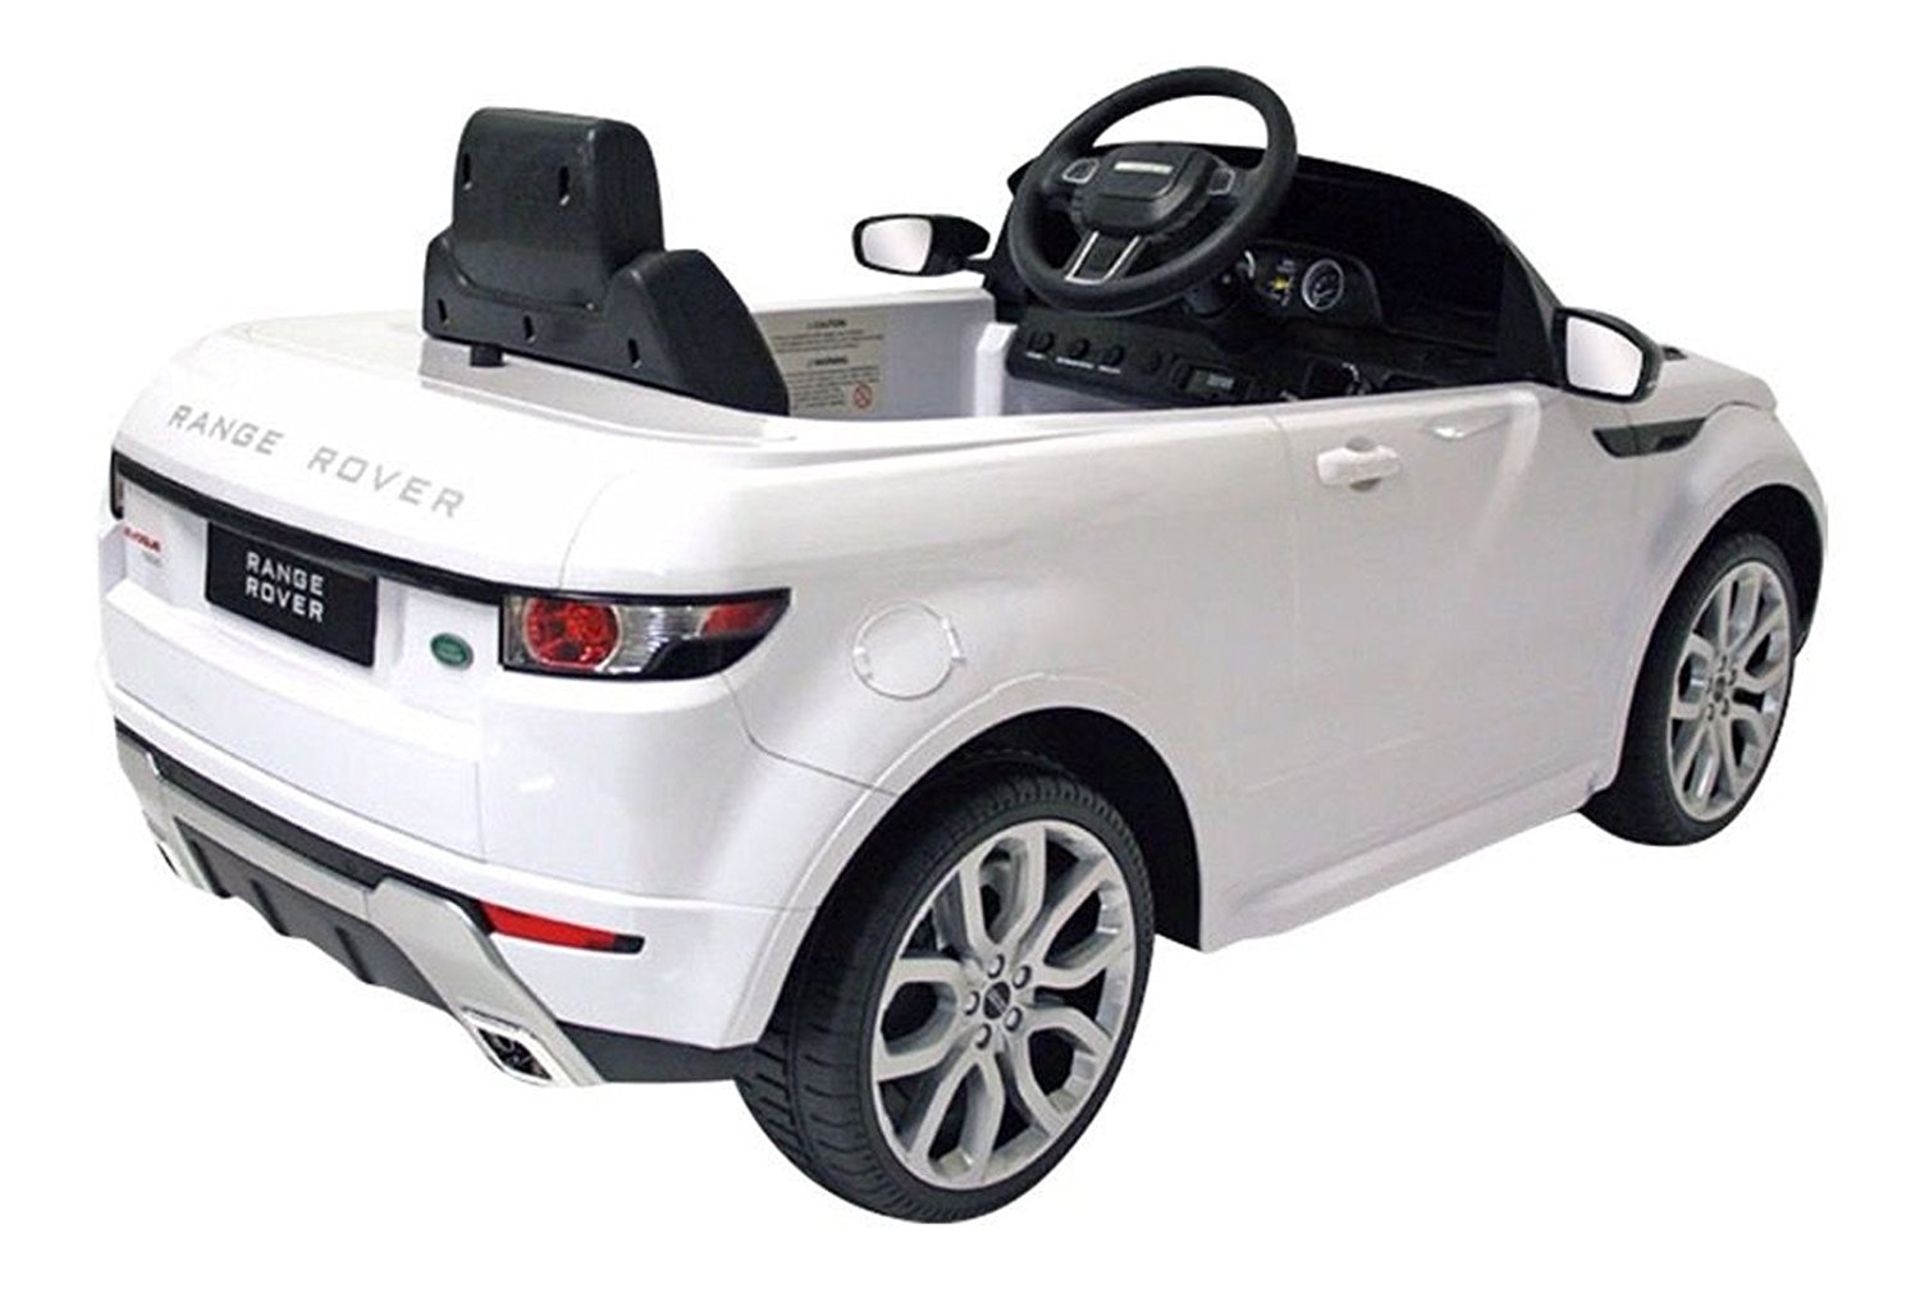 V Brand New Range Rover Evoque 12V Ride on Car - Parental Override Remote Control - Officially - Image 3 of 3